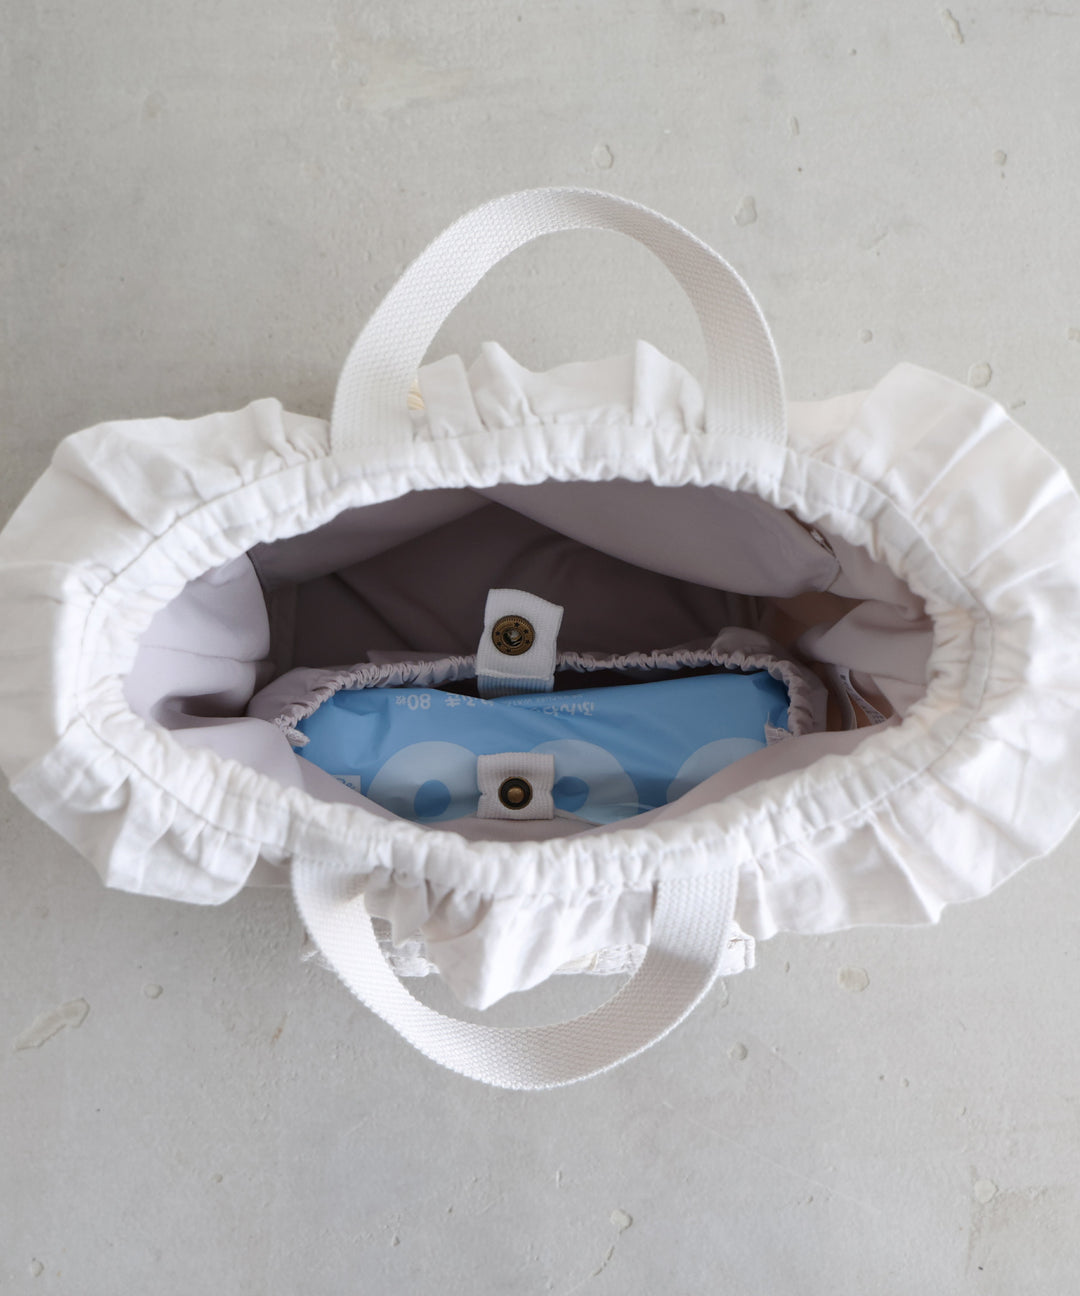 Diaper Pouch (Drawstring Bag)